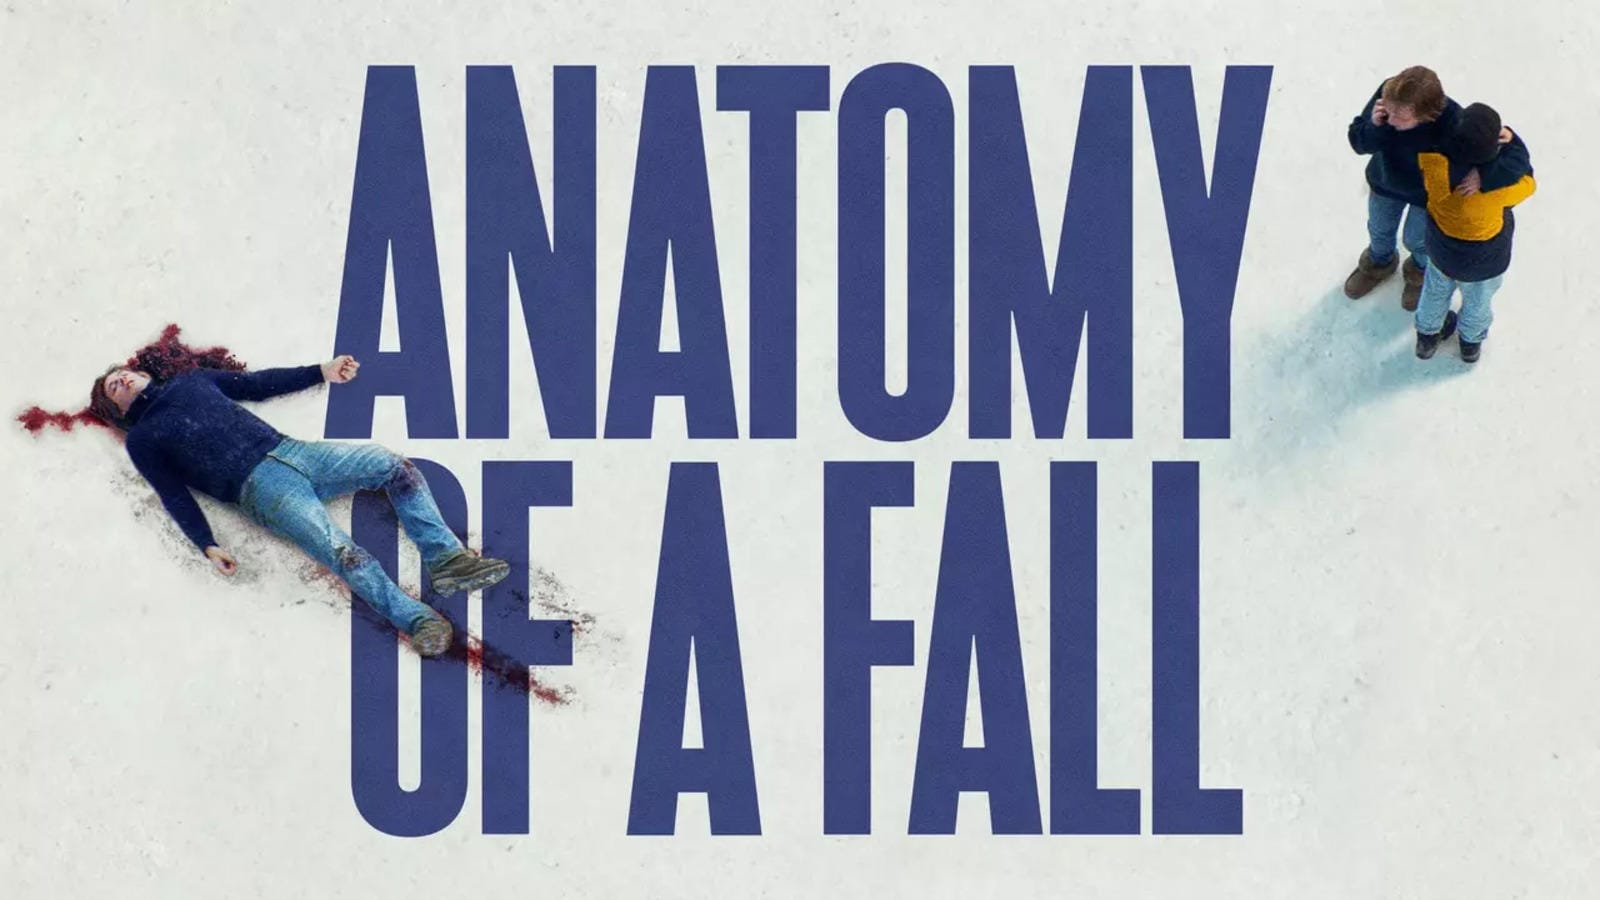 anatomy of a fall